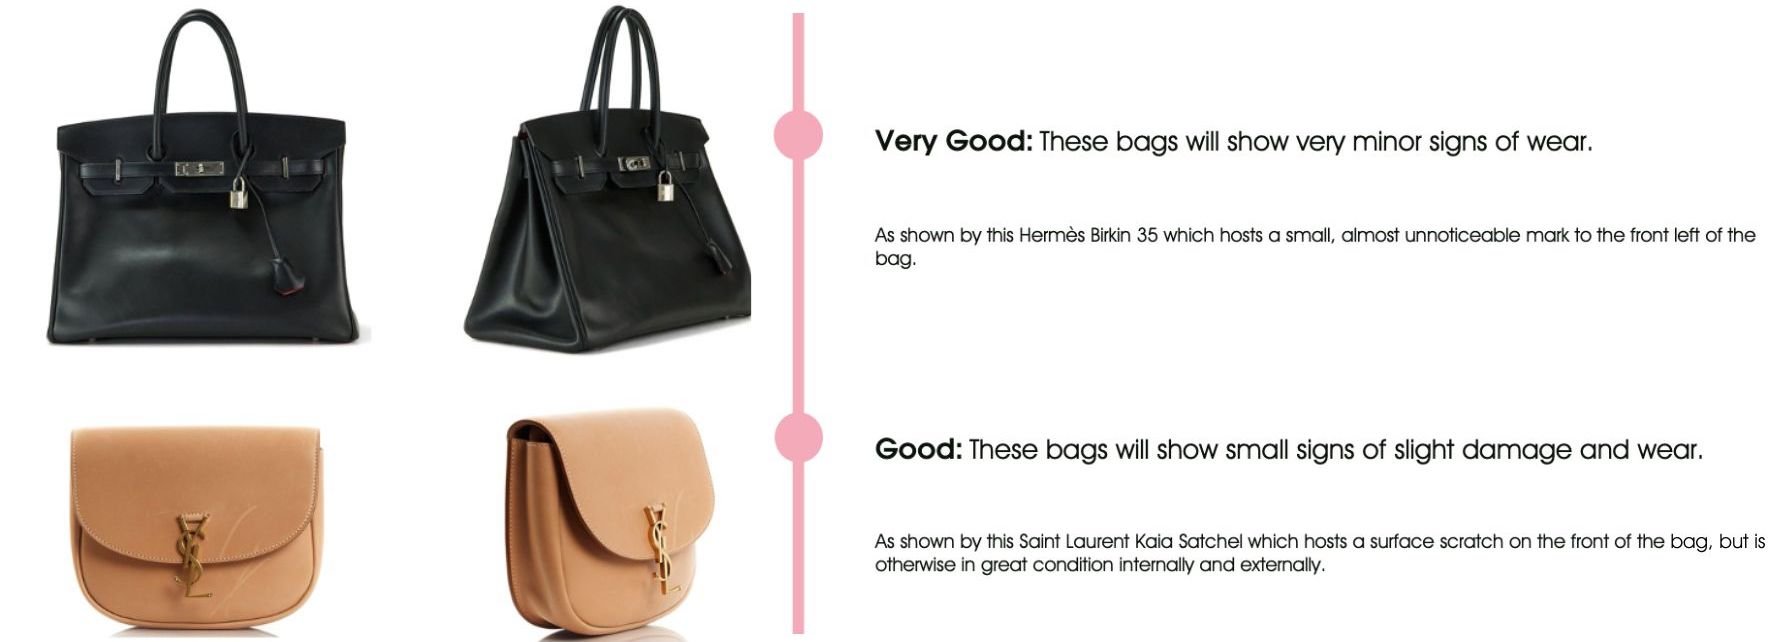 Different Types of Handbags